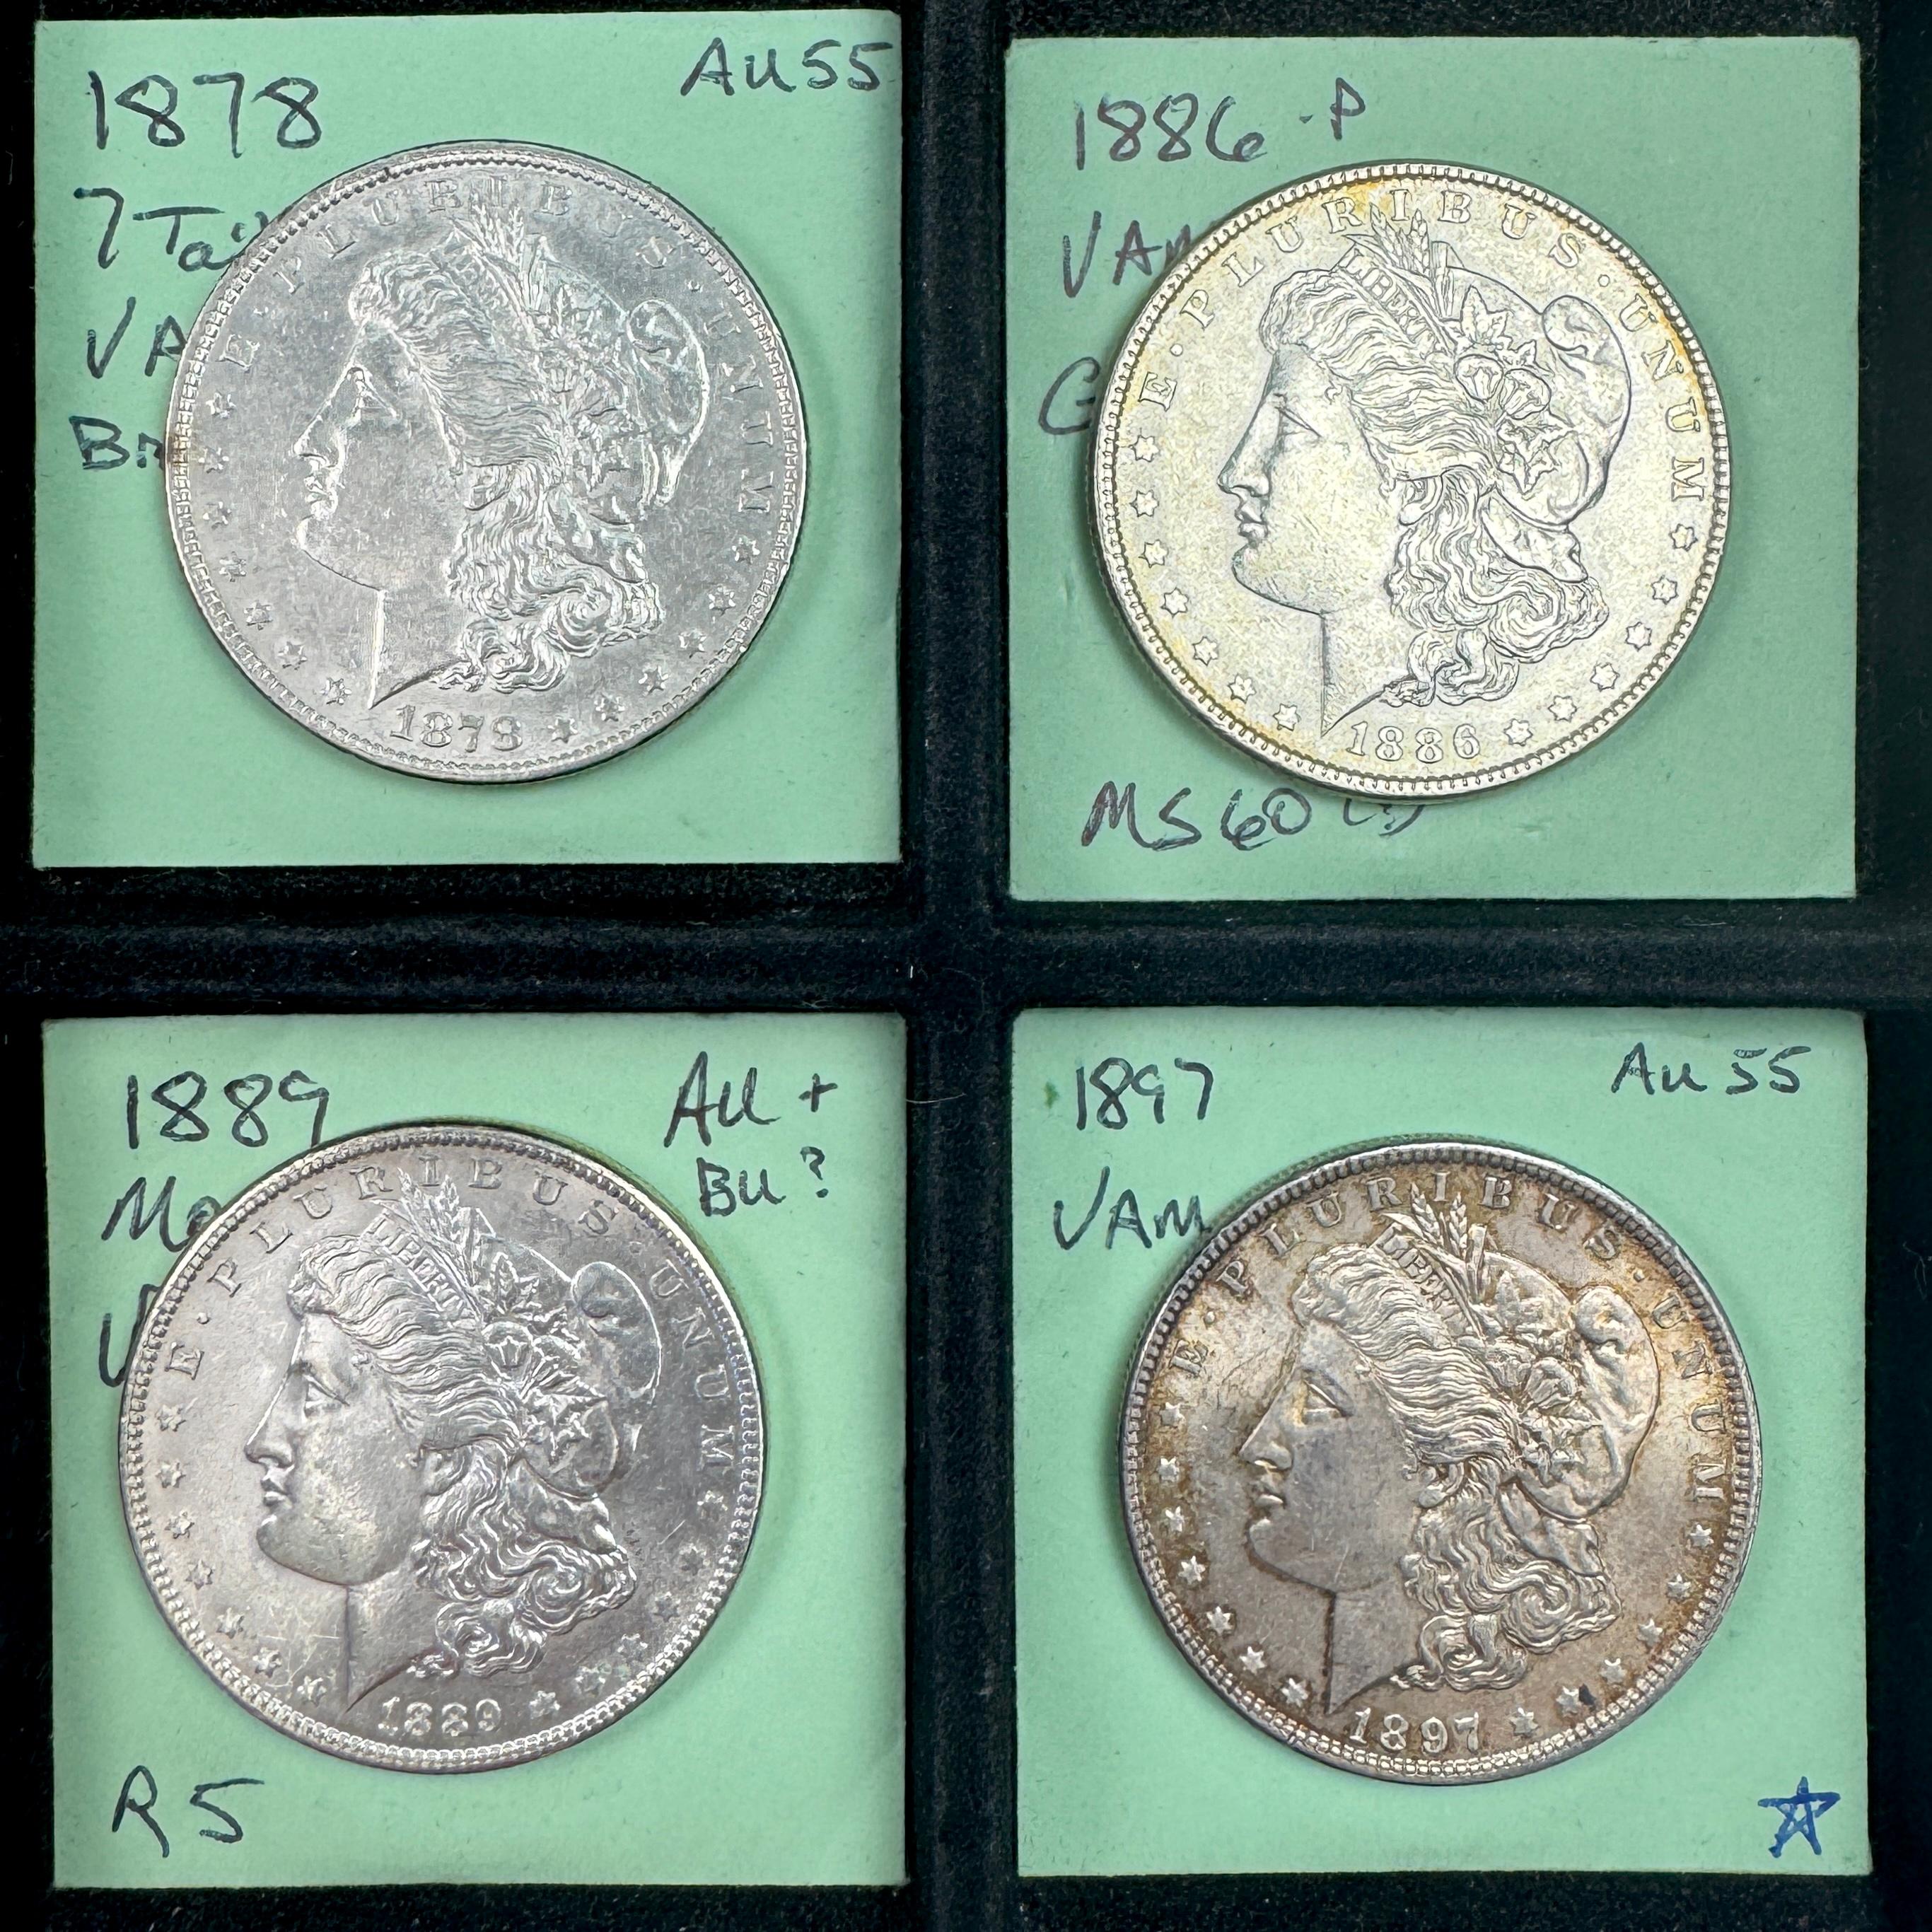 Lot of 4 VAM U.S. Morgan silver dollars